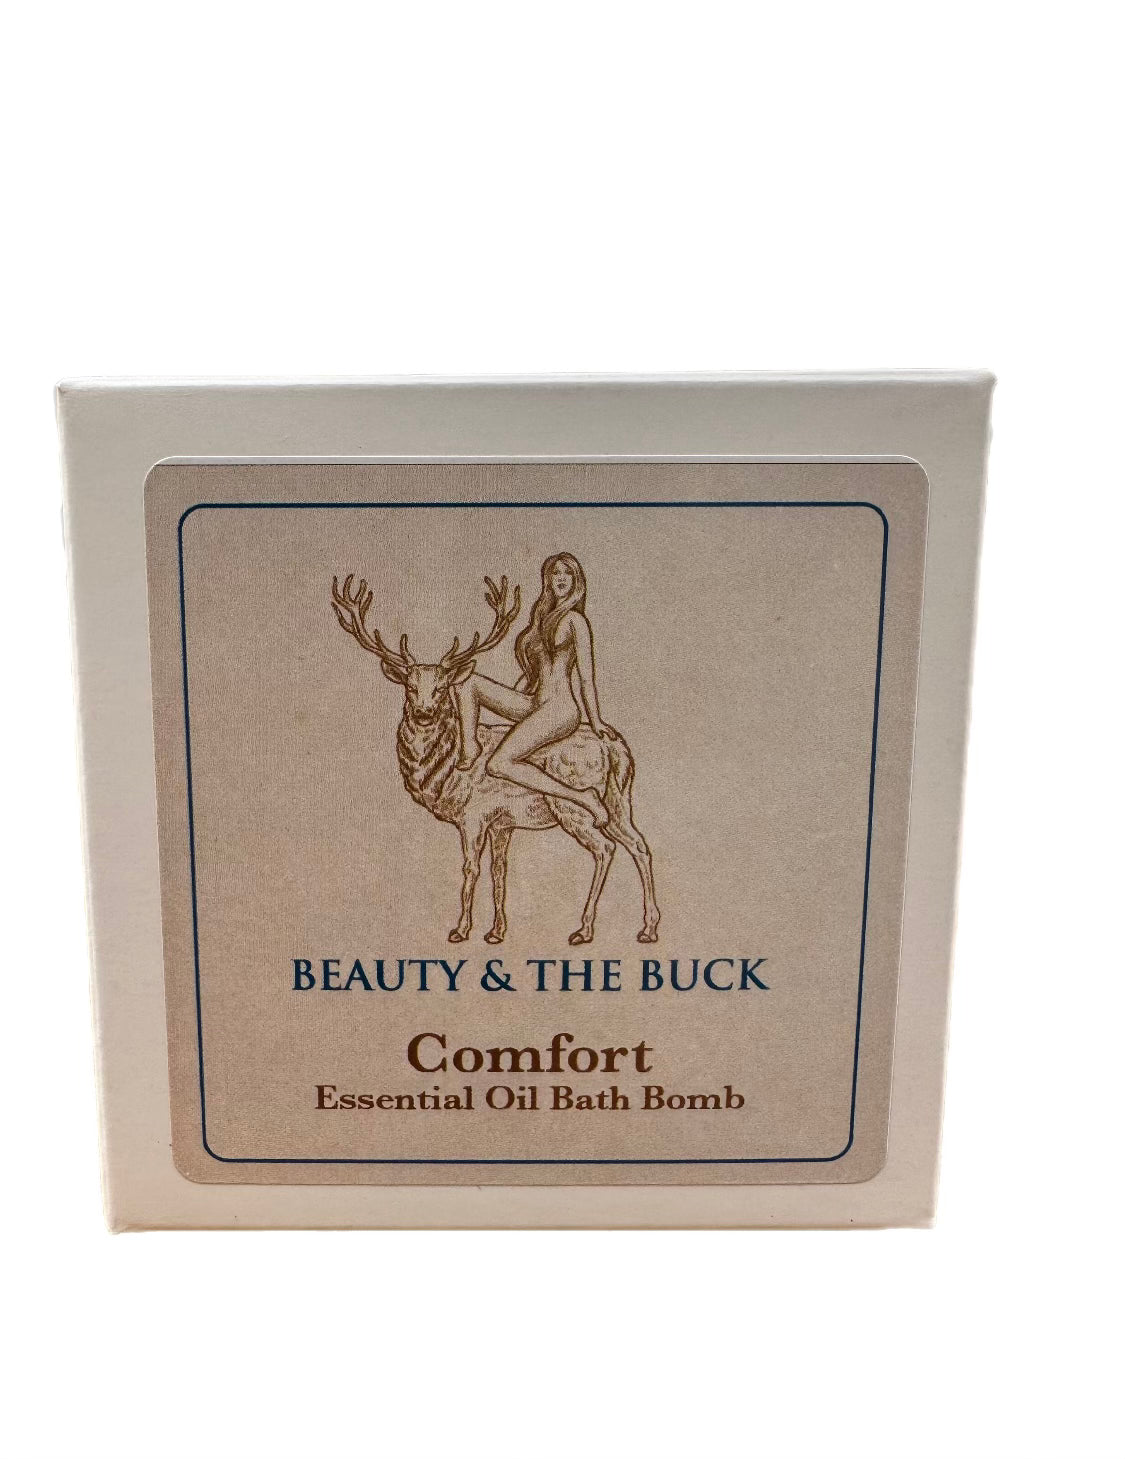 Beauty and the Buck Comfort Bath Bomb